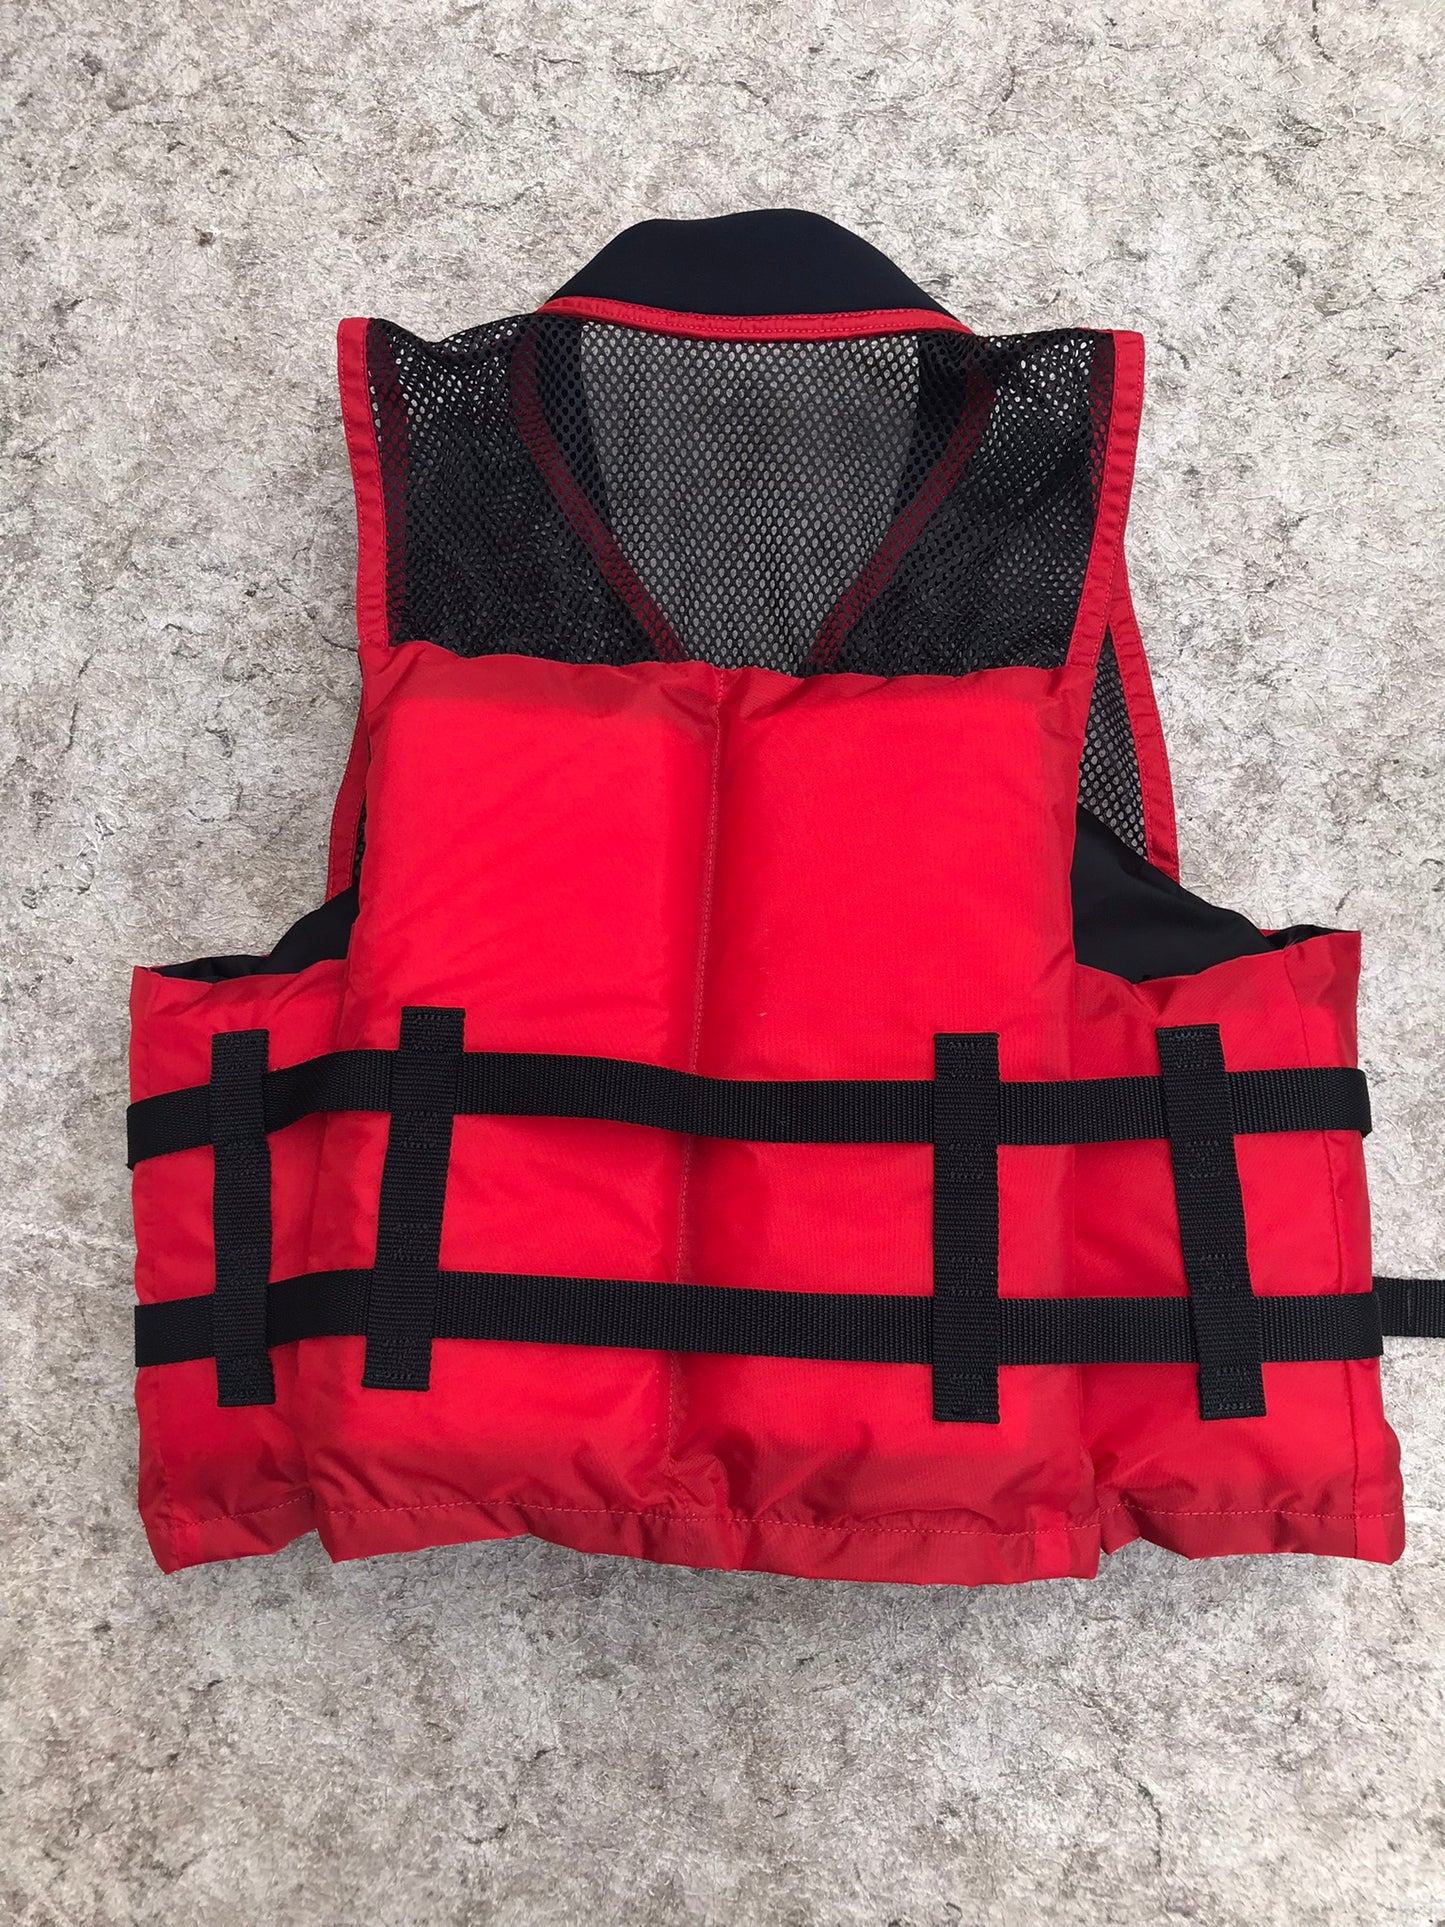 Life Jacket Adult Size 120-200 Lb Trekk Marine Kayak Paddle Canoe Universal Adjustable Red and Black With Whistle Excellent